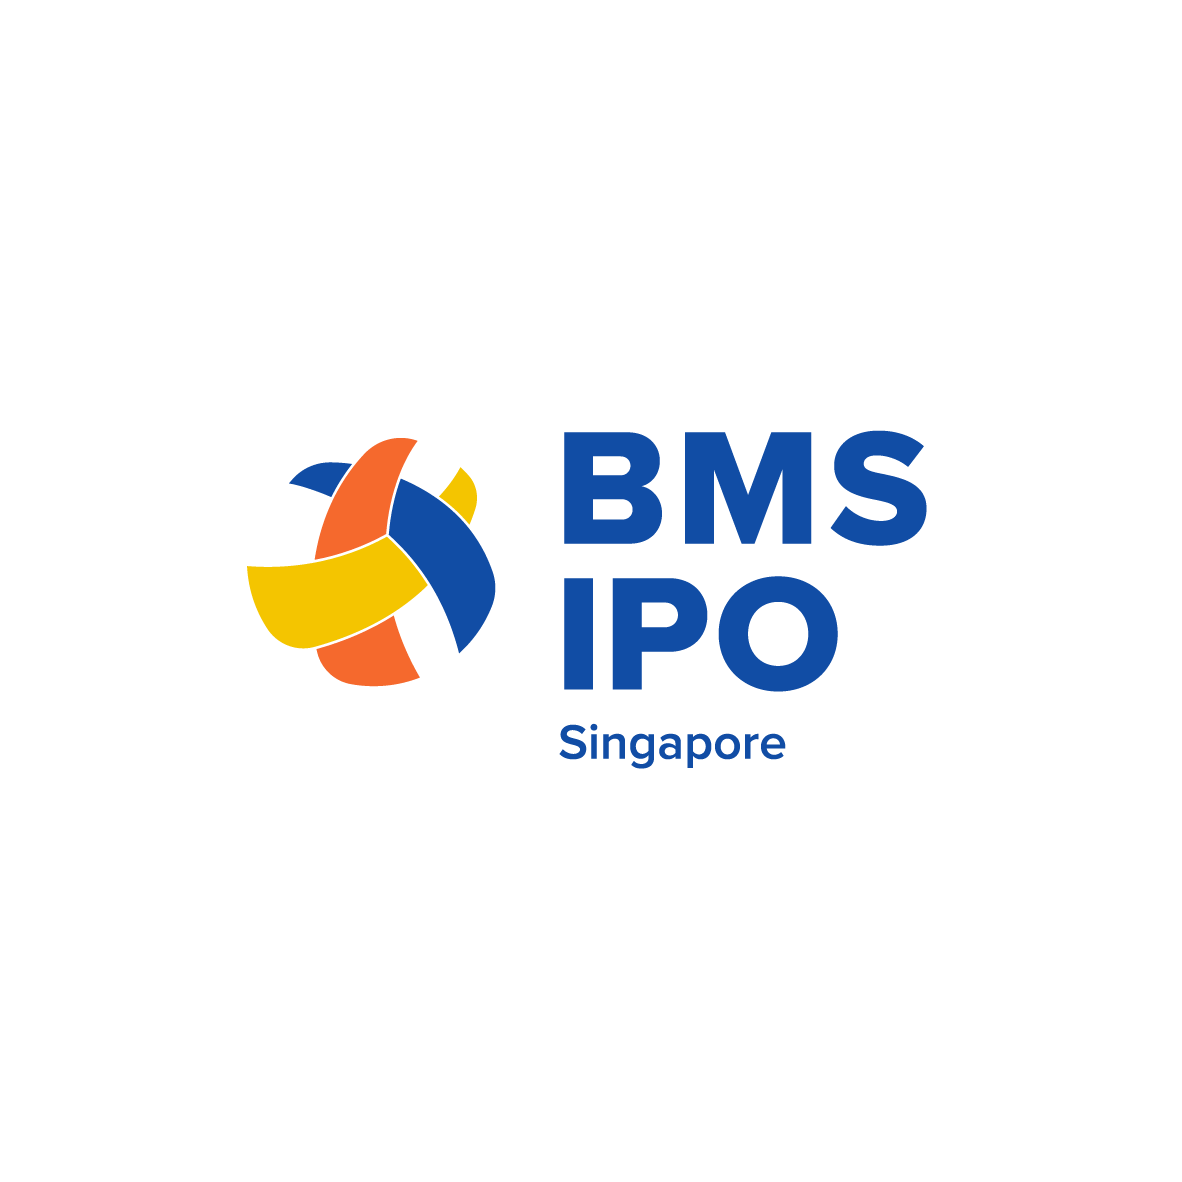 BMSIPO logo